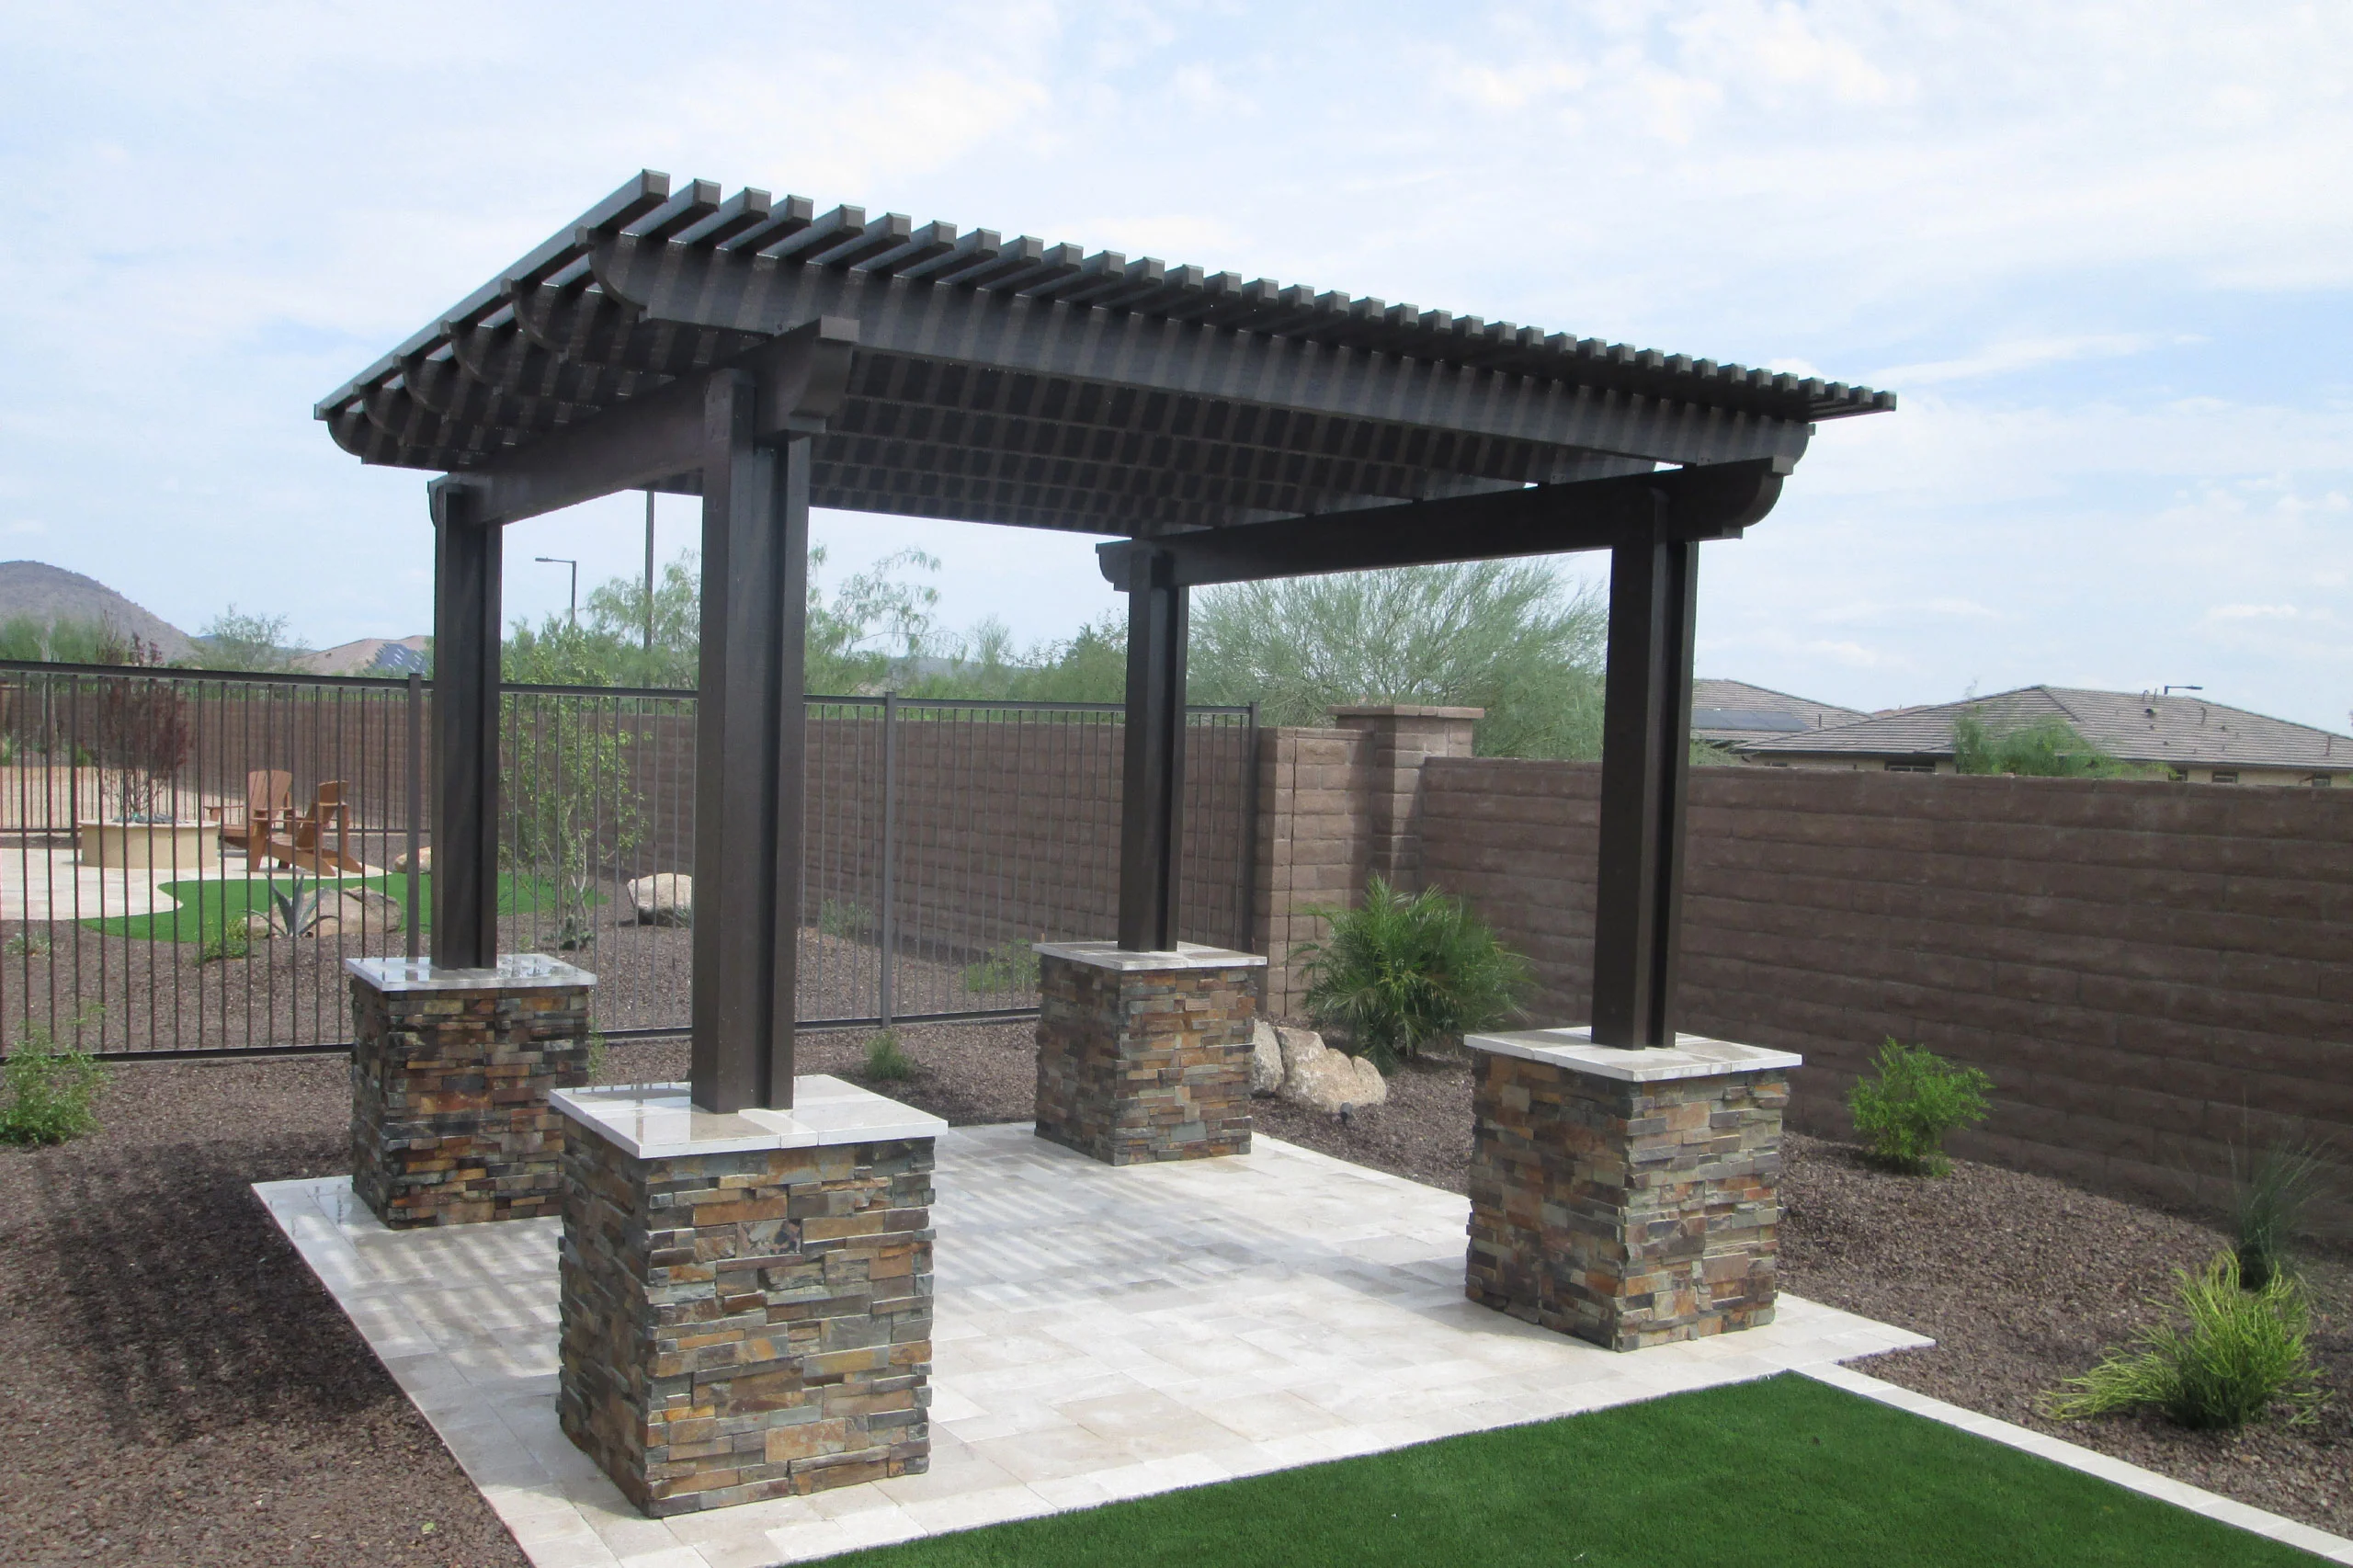 Customized Alumawood lattice pergola design for a patio